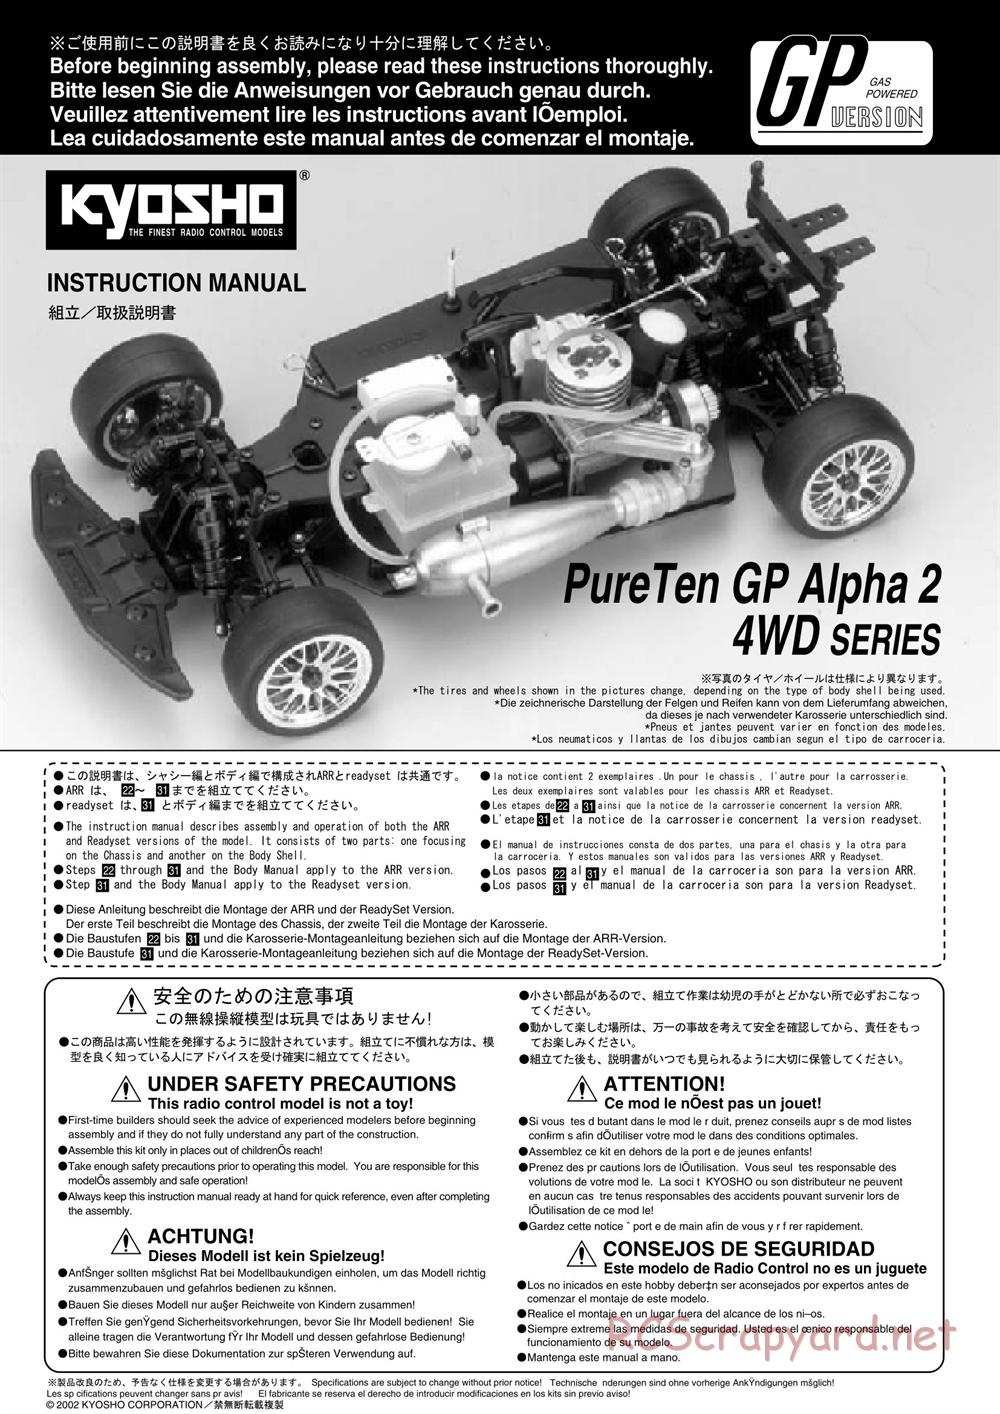 Kyosho - PureTen GP Alpha 2 - Manual - Page 1